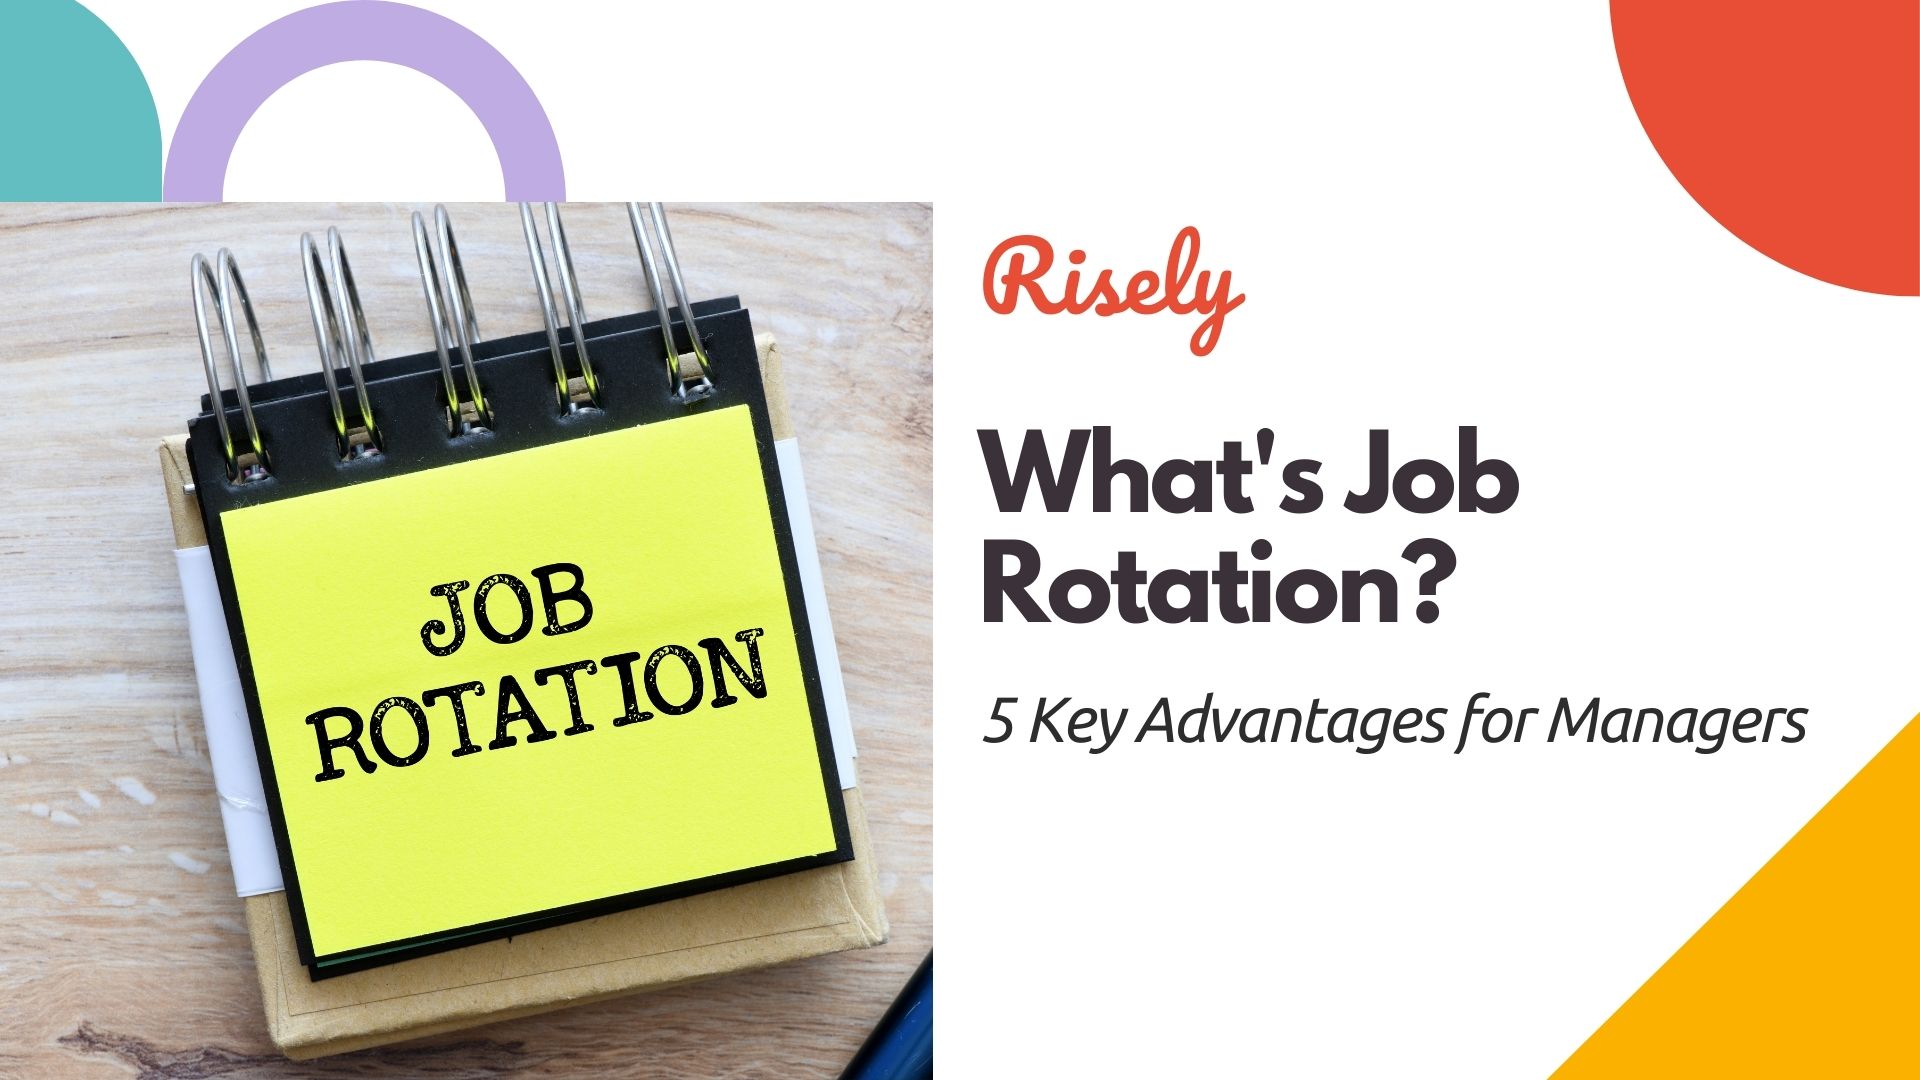 What's Job Rotation?